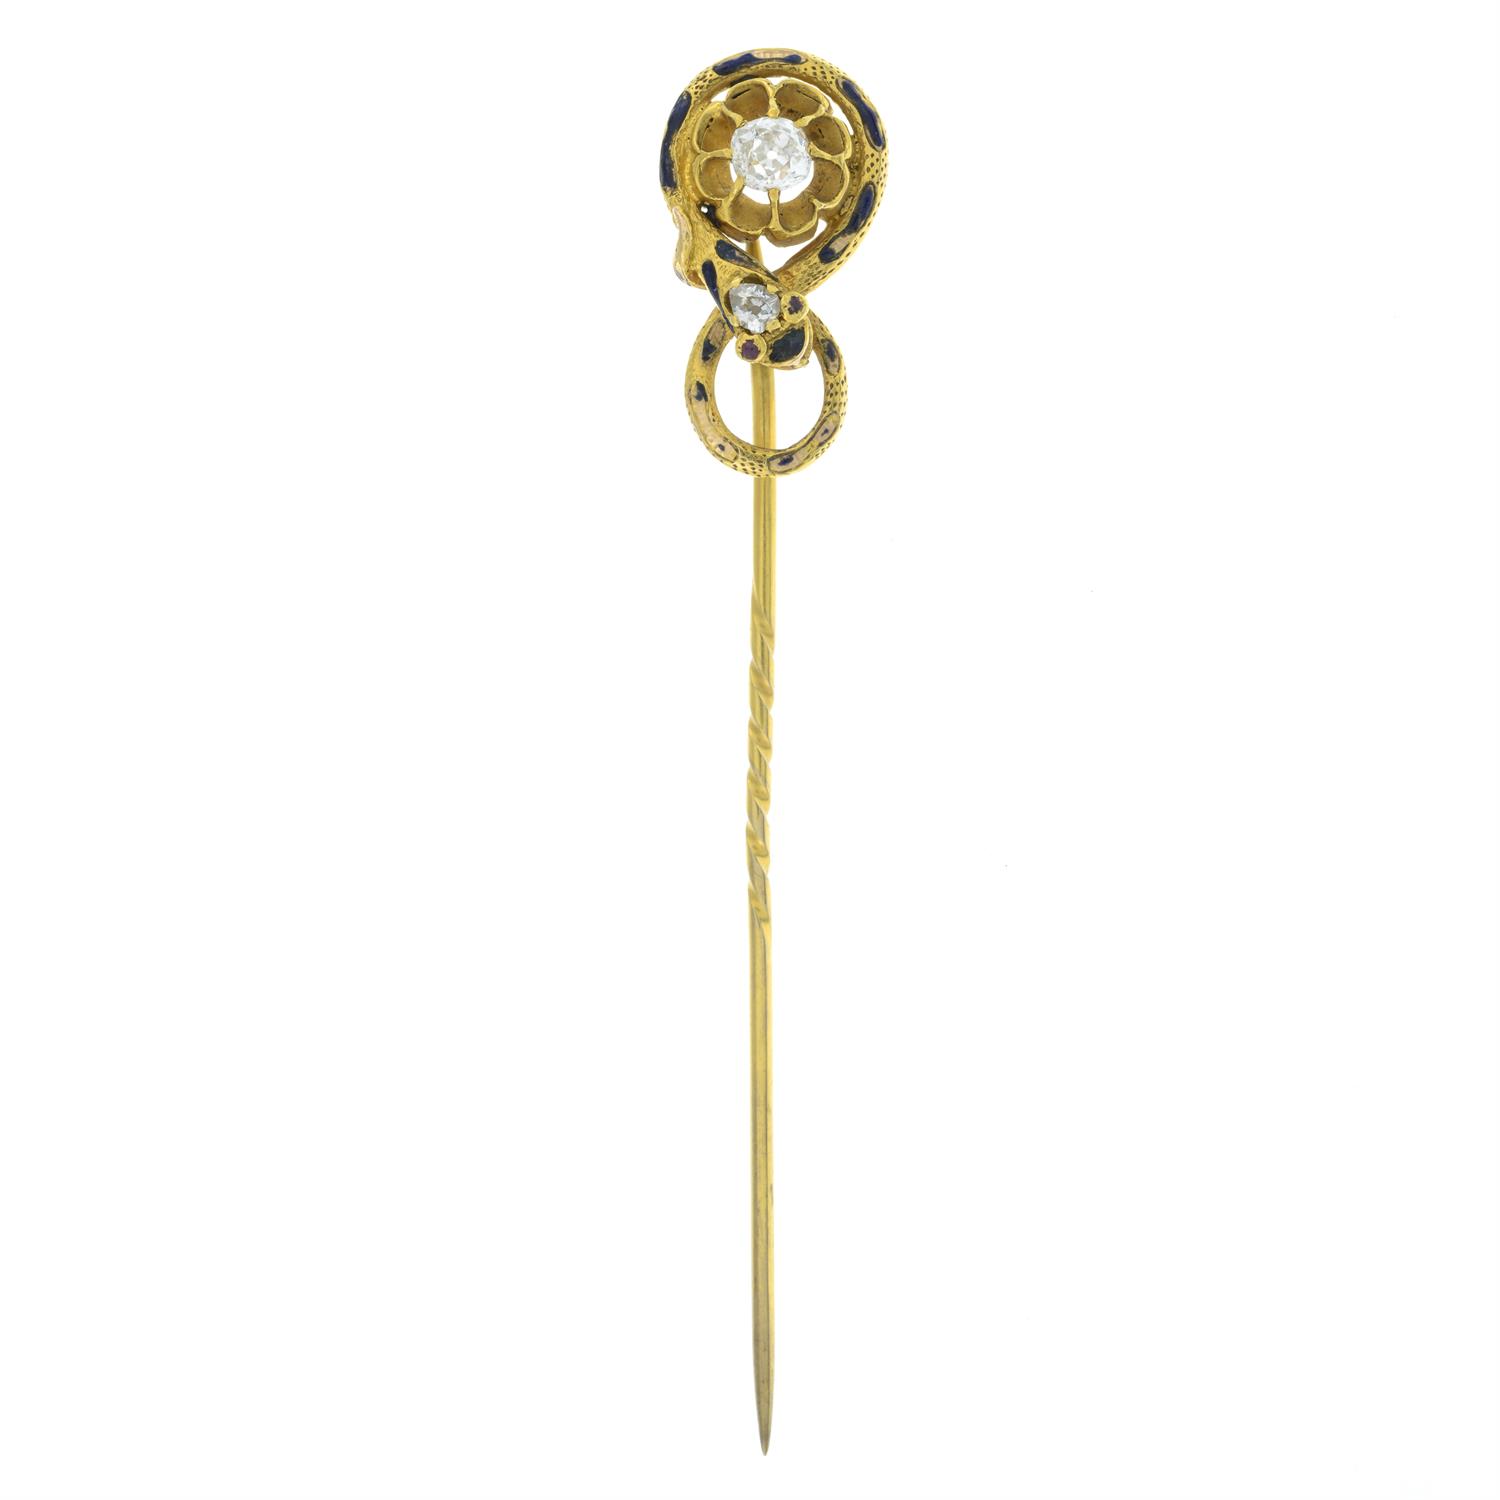 19th century gold diamond and enamel snake stickpin - Image 3 of 5